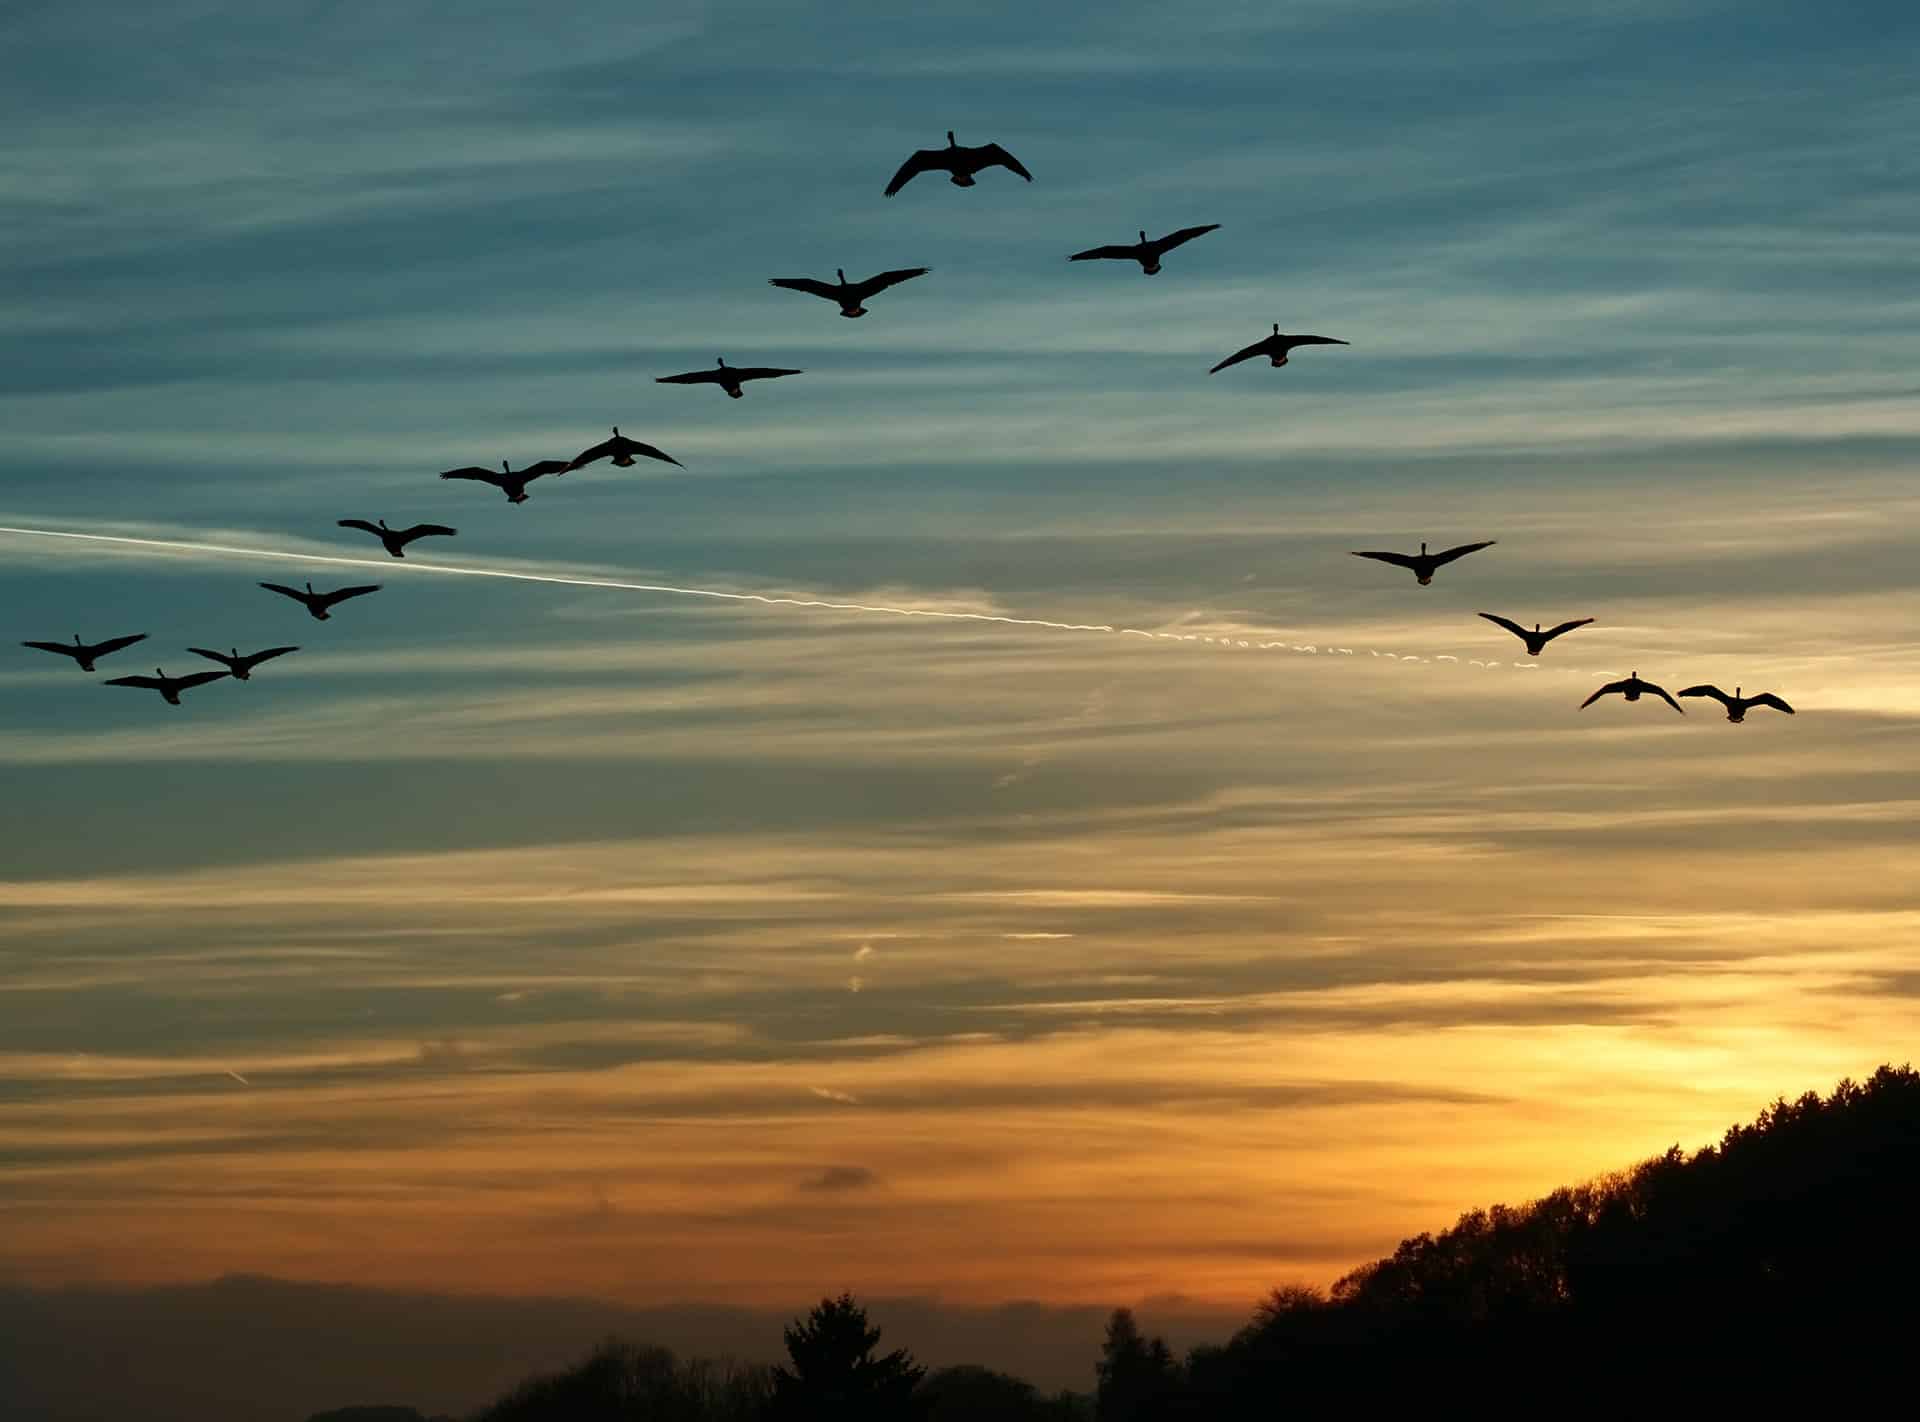 Migrating birds in sunset sky